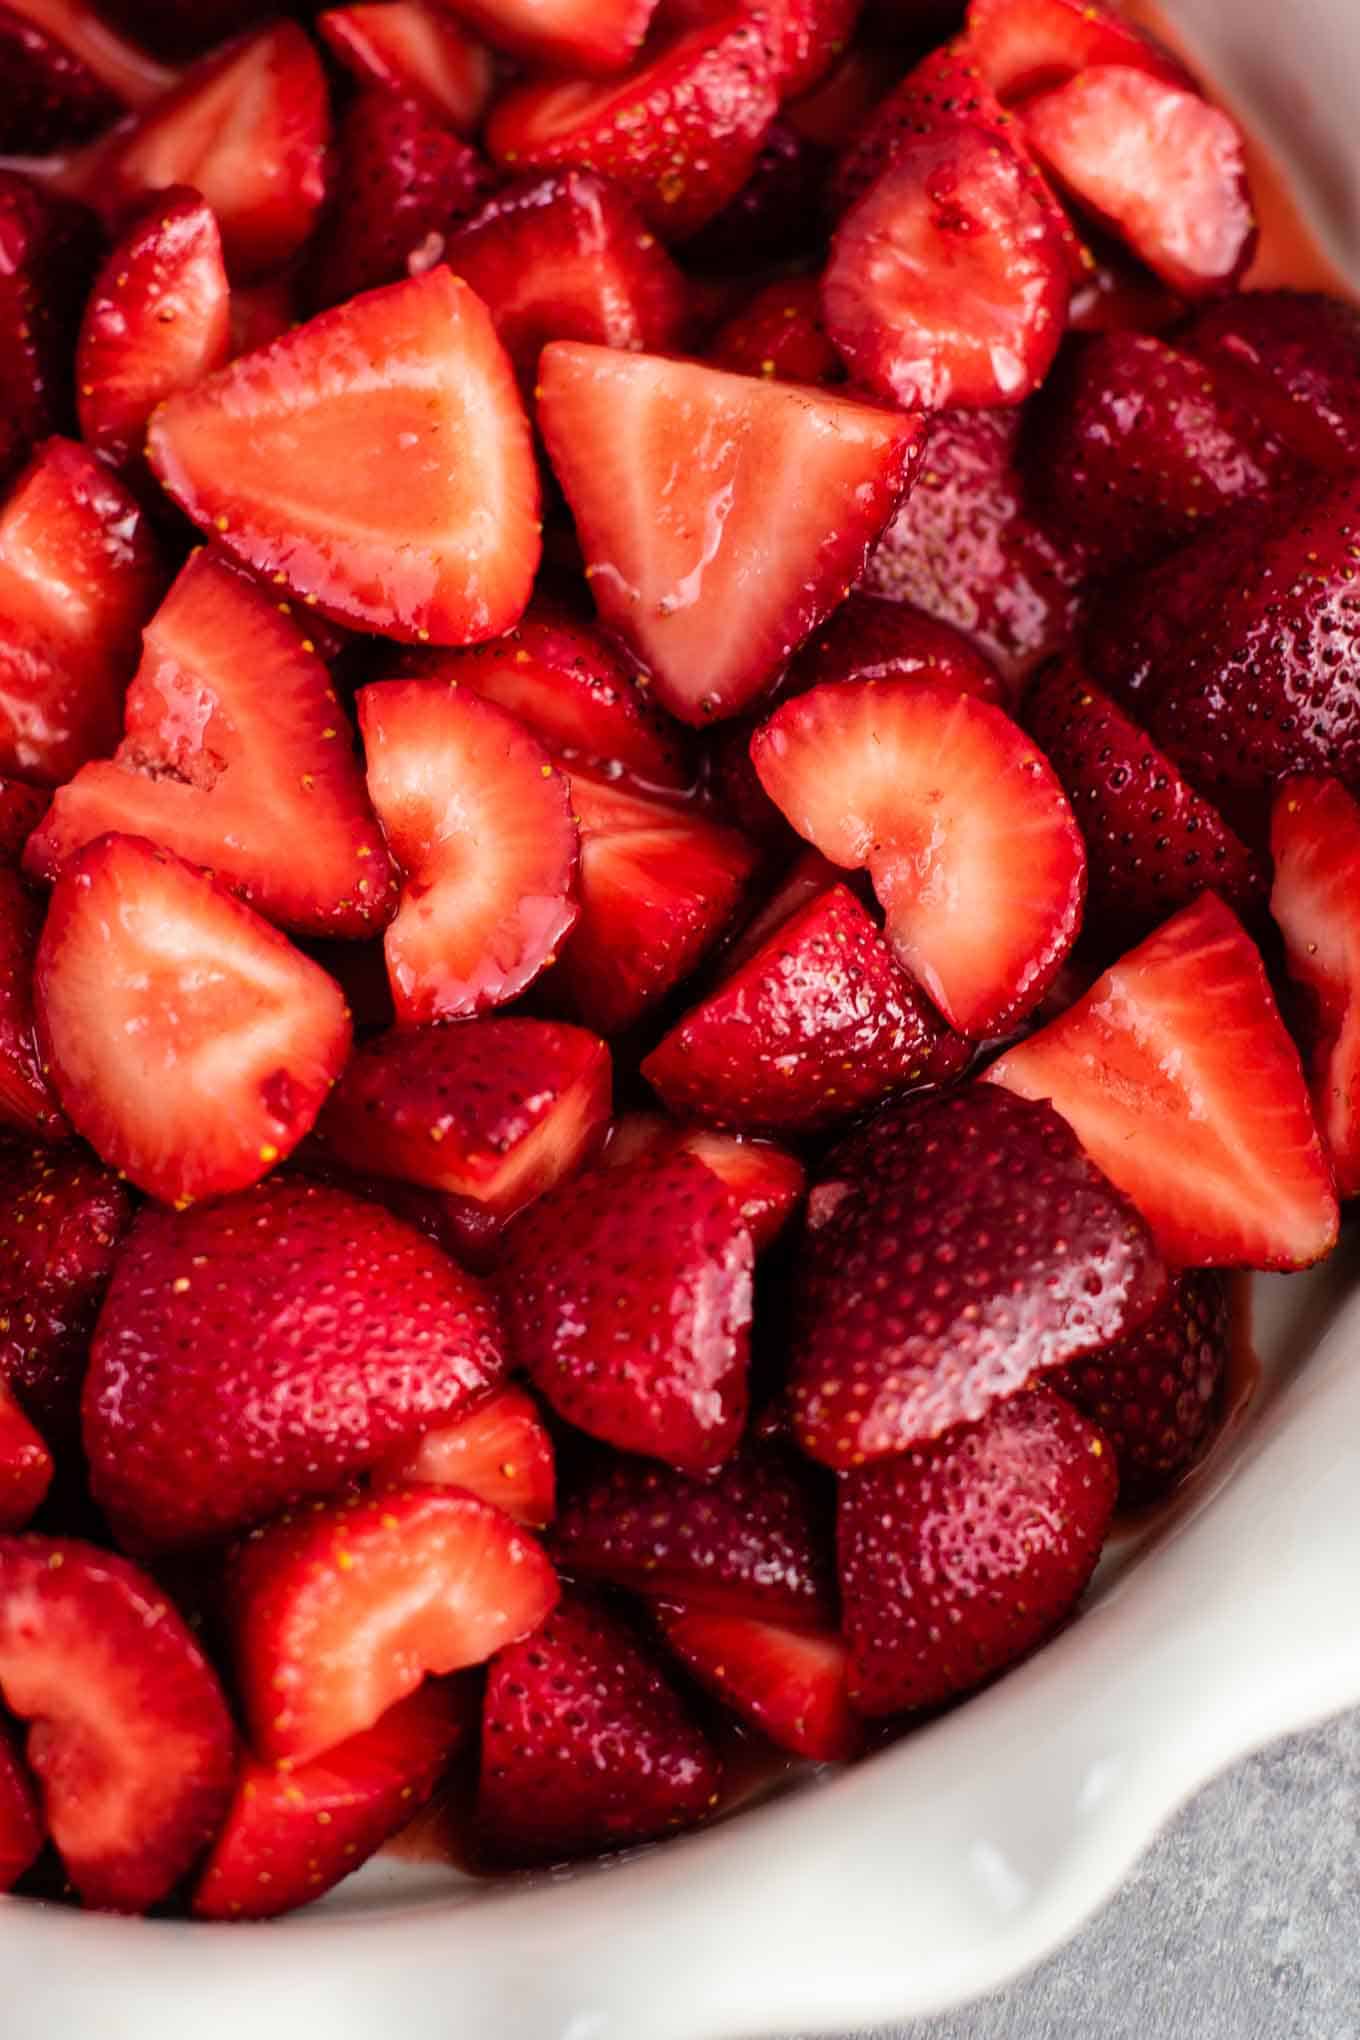 Easy strawberry crisp recipe (gluten free + vegan) – perfect for using up fresh strawberries! #strawberrycrisp #dessert #glutenfree #vegan #healthydessert #dairyfree